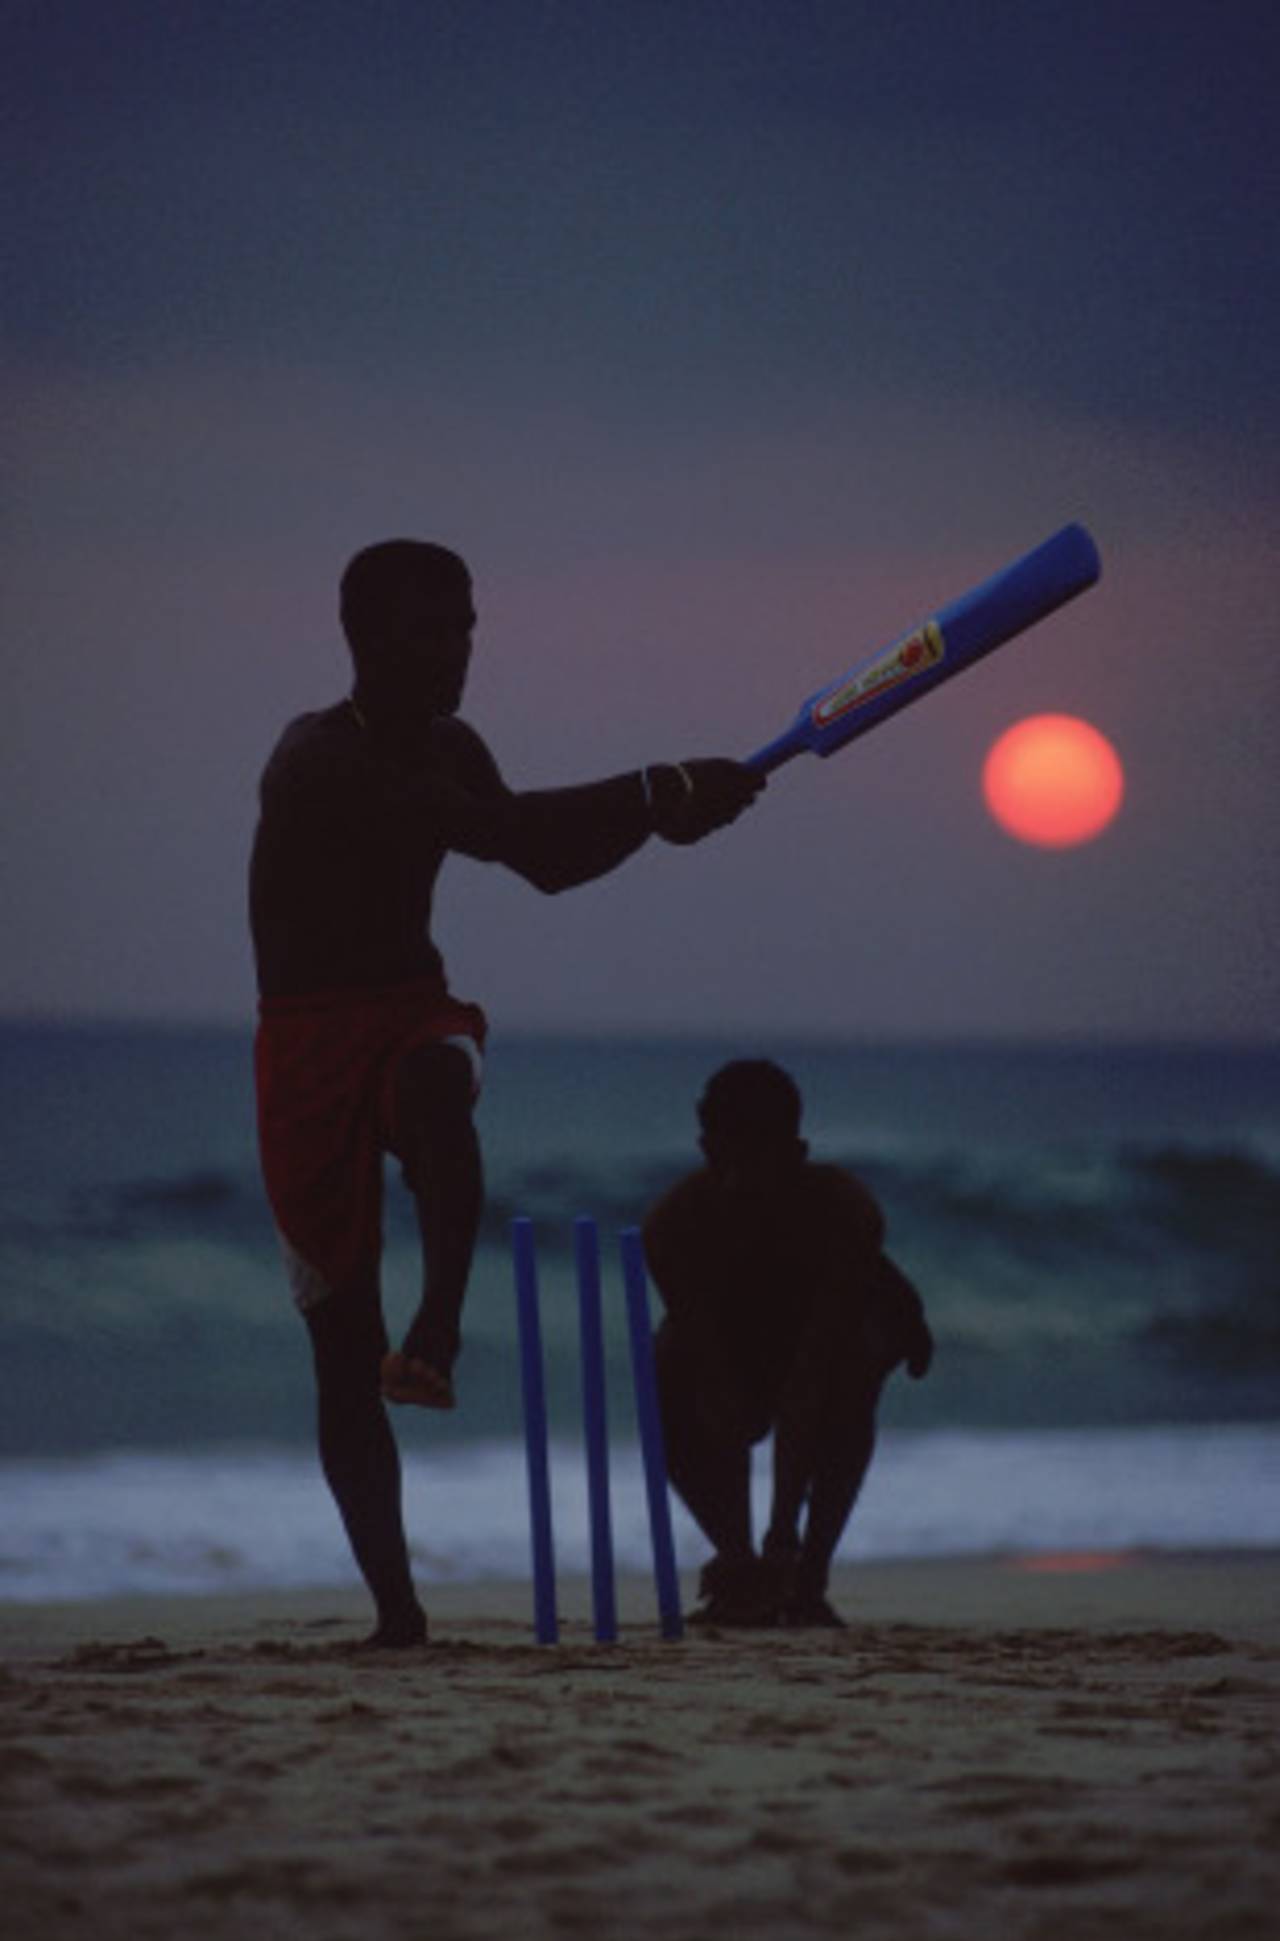 Cricket on the Marina had its own rules&nbsp;&nbsp;&bull;&nbsp;&nbsp;Getty Images